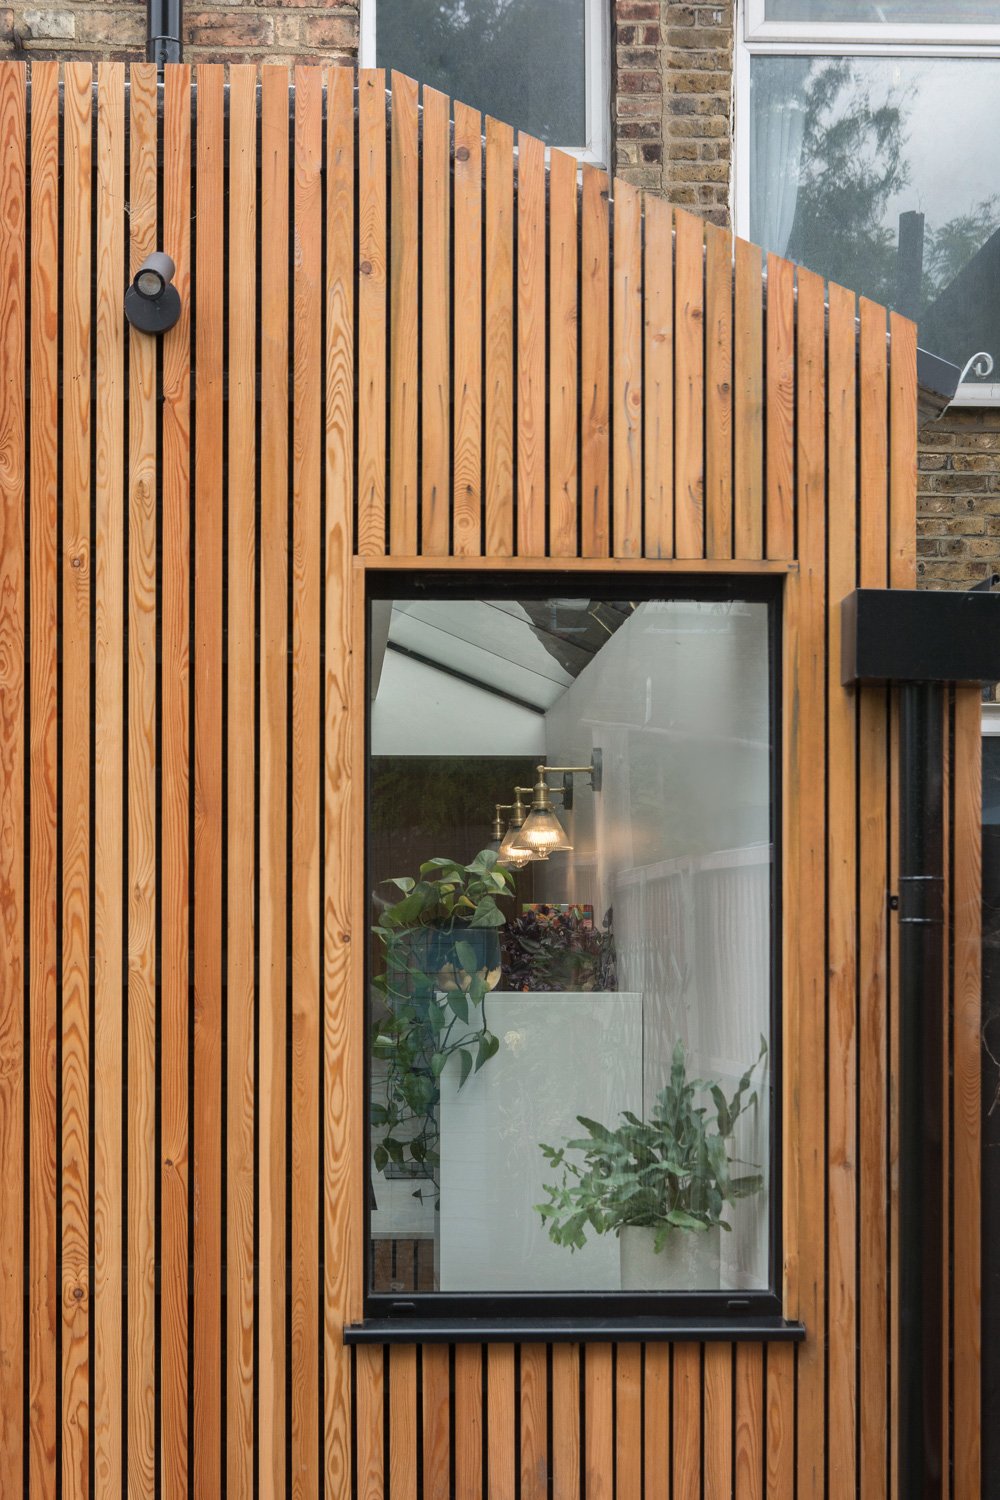 External timber panelling